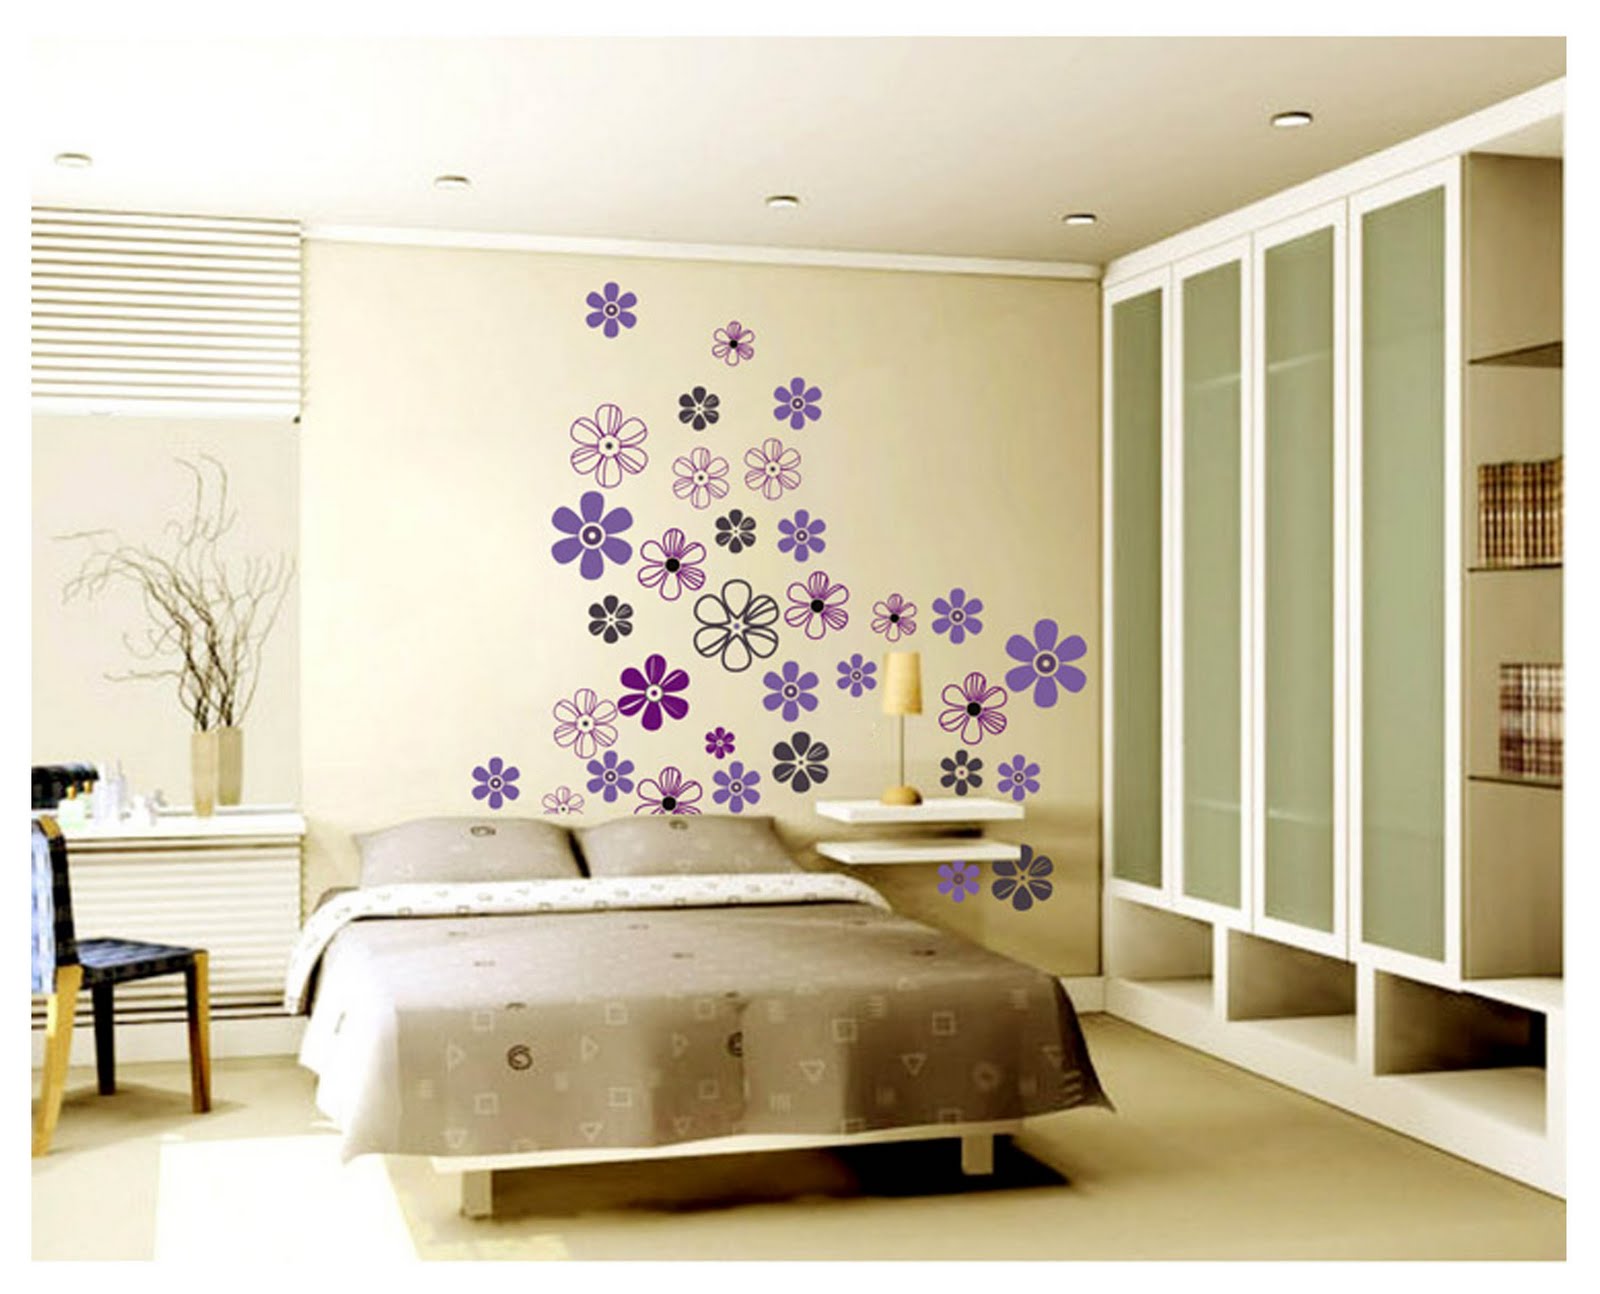 Room Wallpaper For Sale In Ghana - 1024x828 Wallpaper - teahub.io